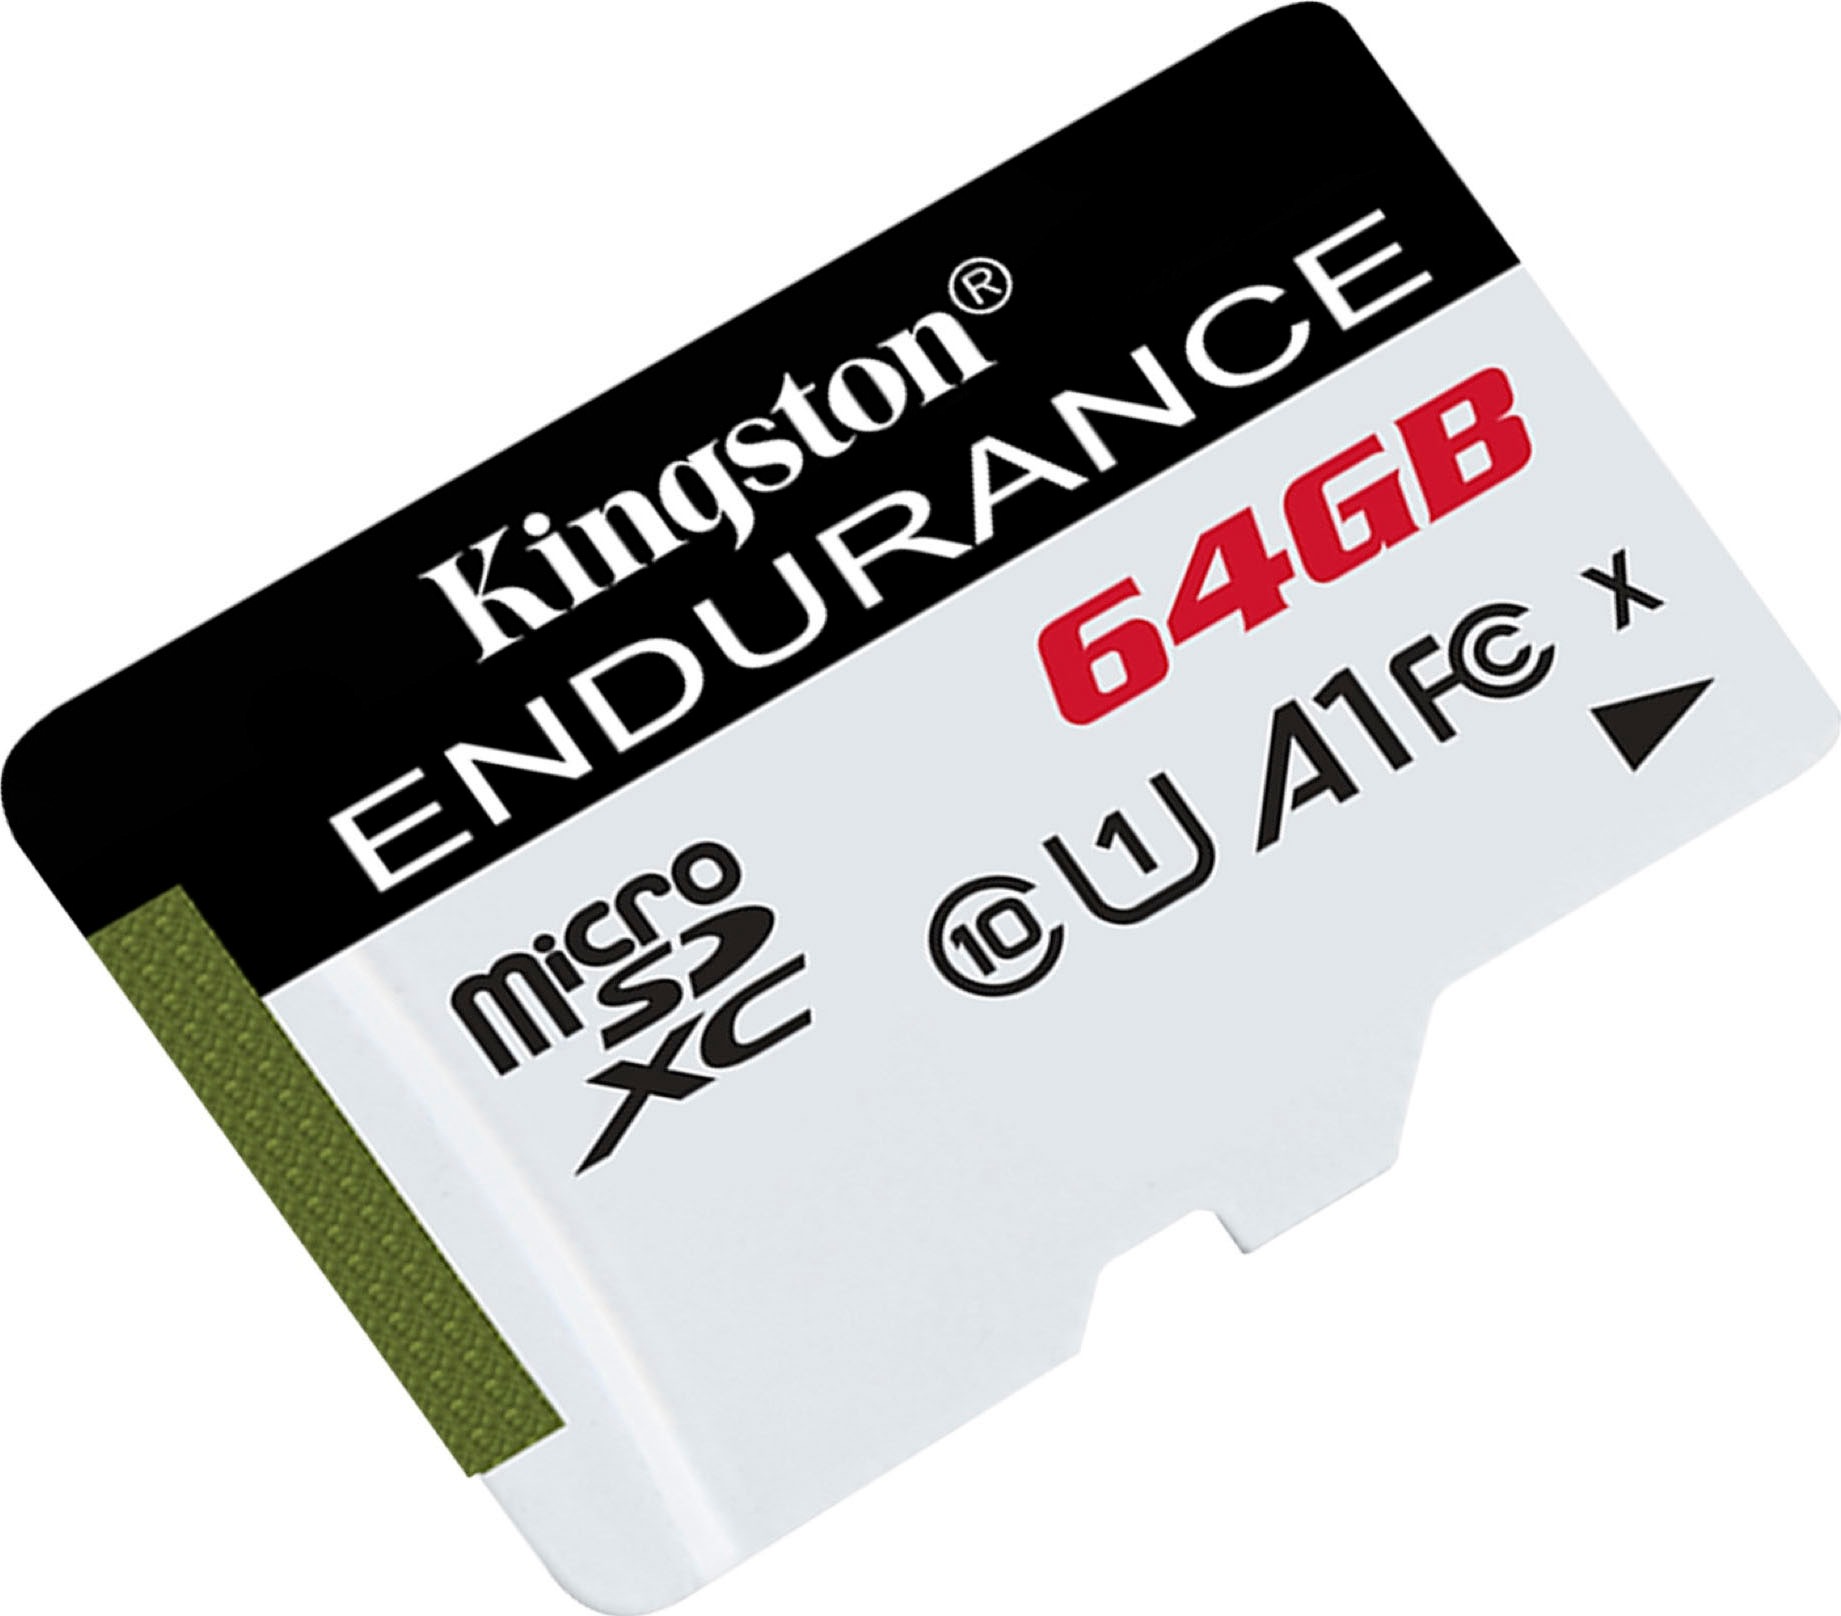 Kingston Speicherkarte »HIGH-ENDURANCE microSD 64GB«, (UHS-I Class 10 95 MB/s Lesegeschwindigkeit)